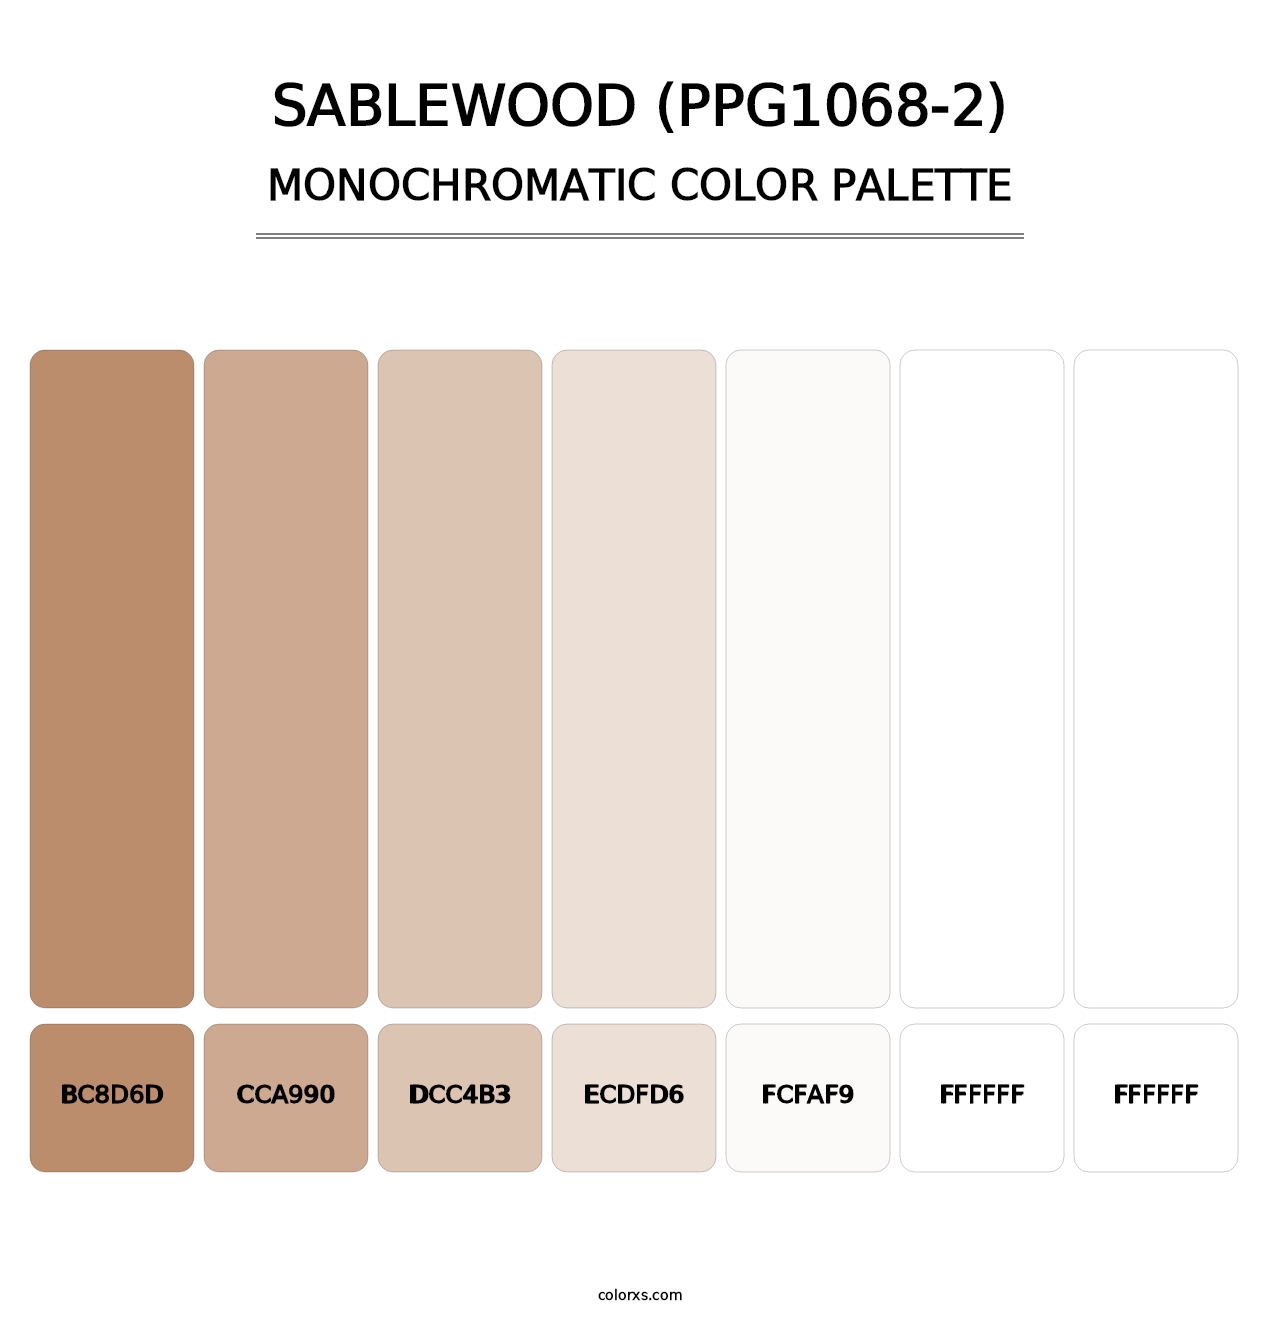 Sablewood (PPG1068-2) - Monochromatic Color Palette